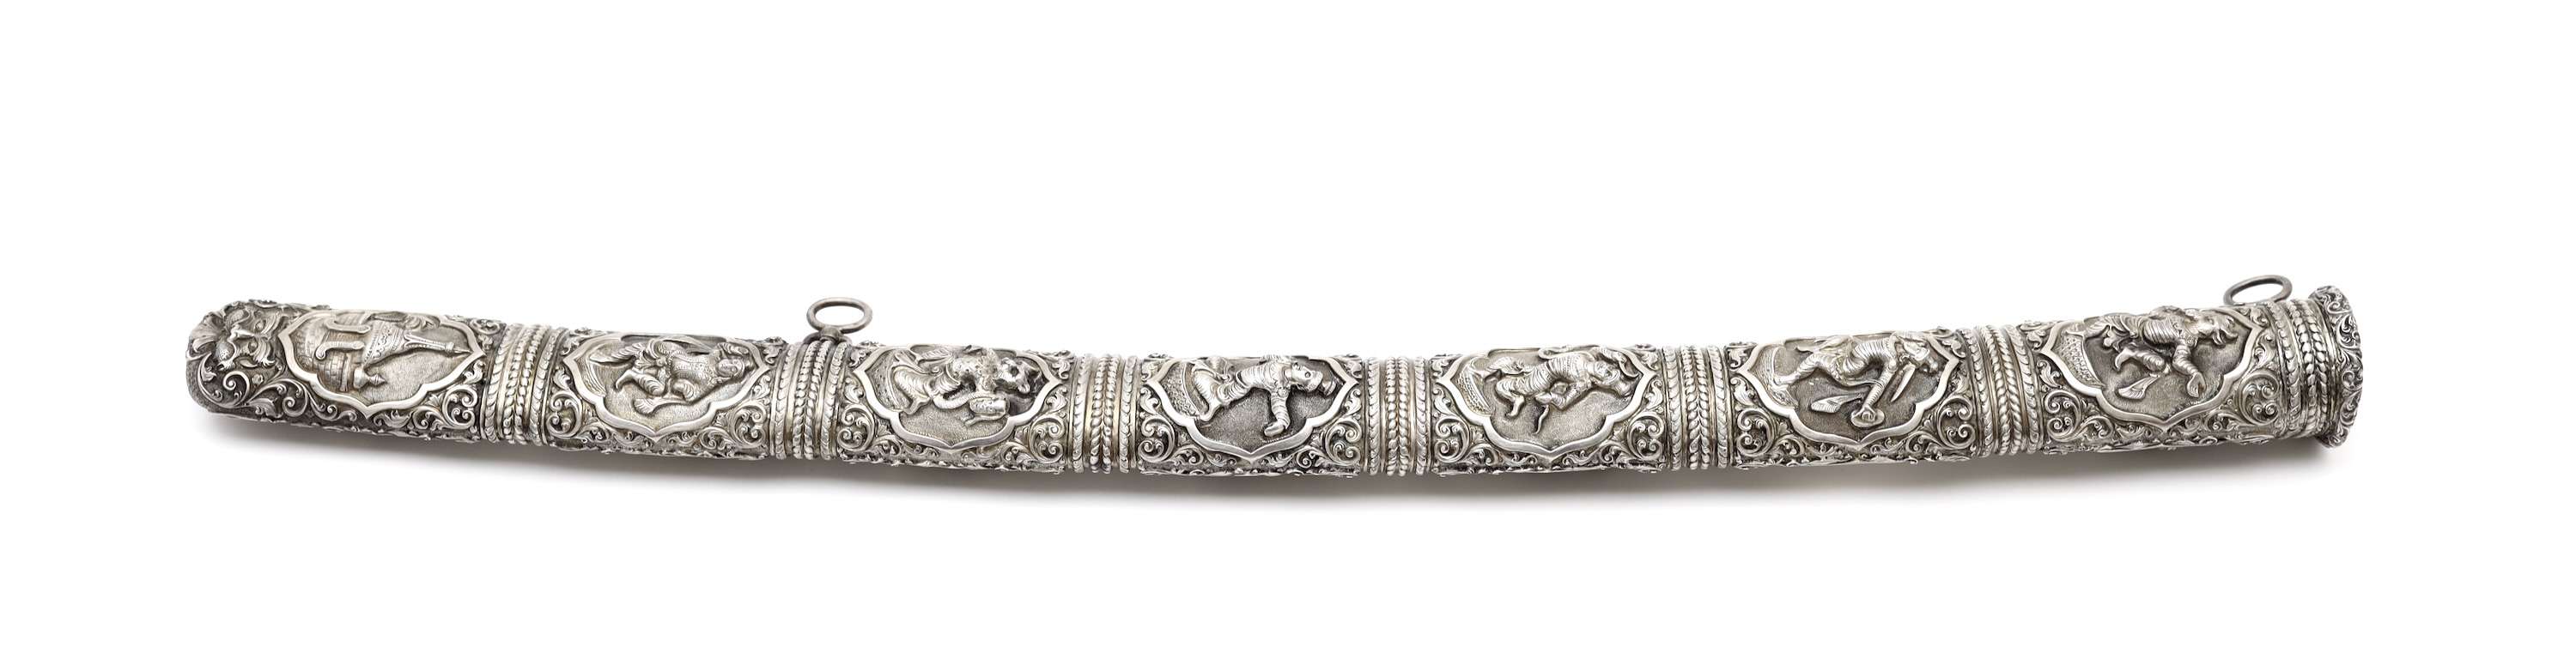 Fine Burmese silver repousse sword scabbard